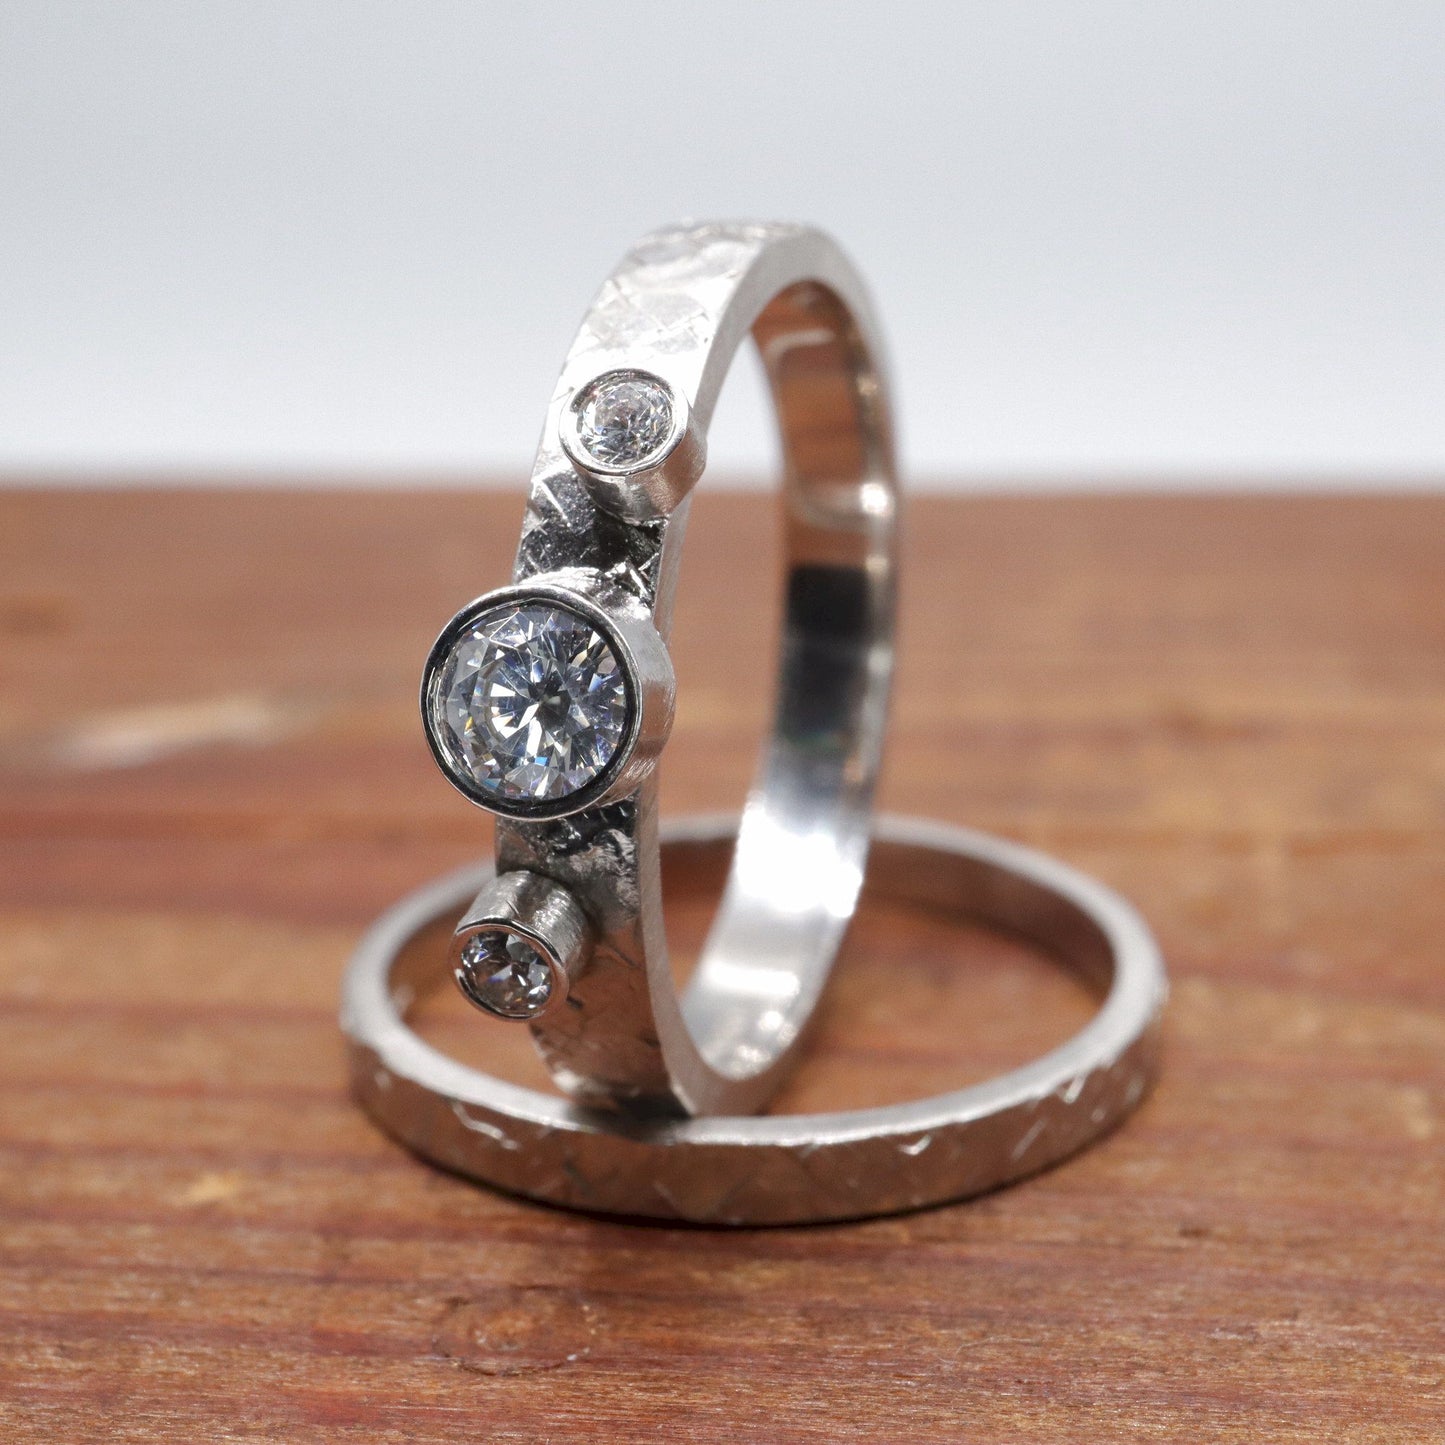 Trilogy diamond bridal set, Kendal white gold three stone rustic design ring and matching 2mm band.